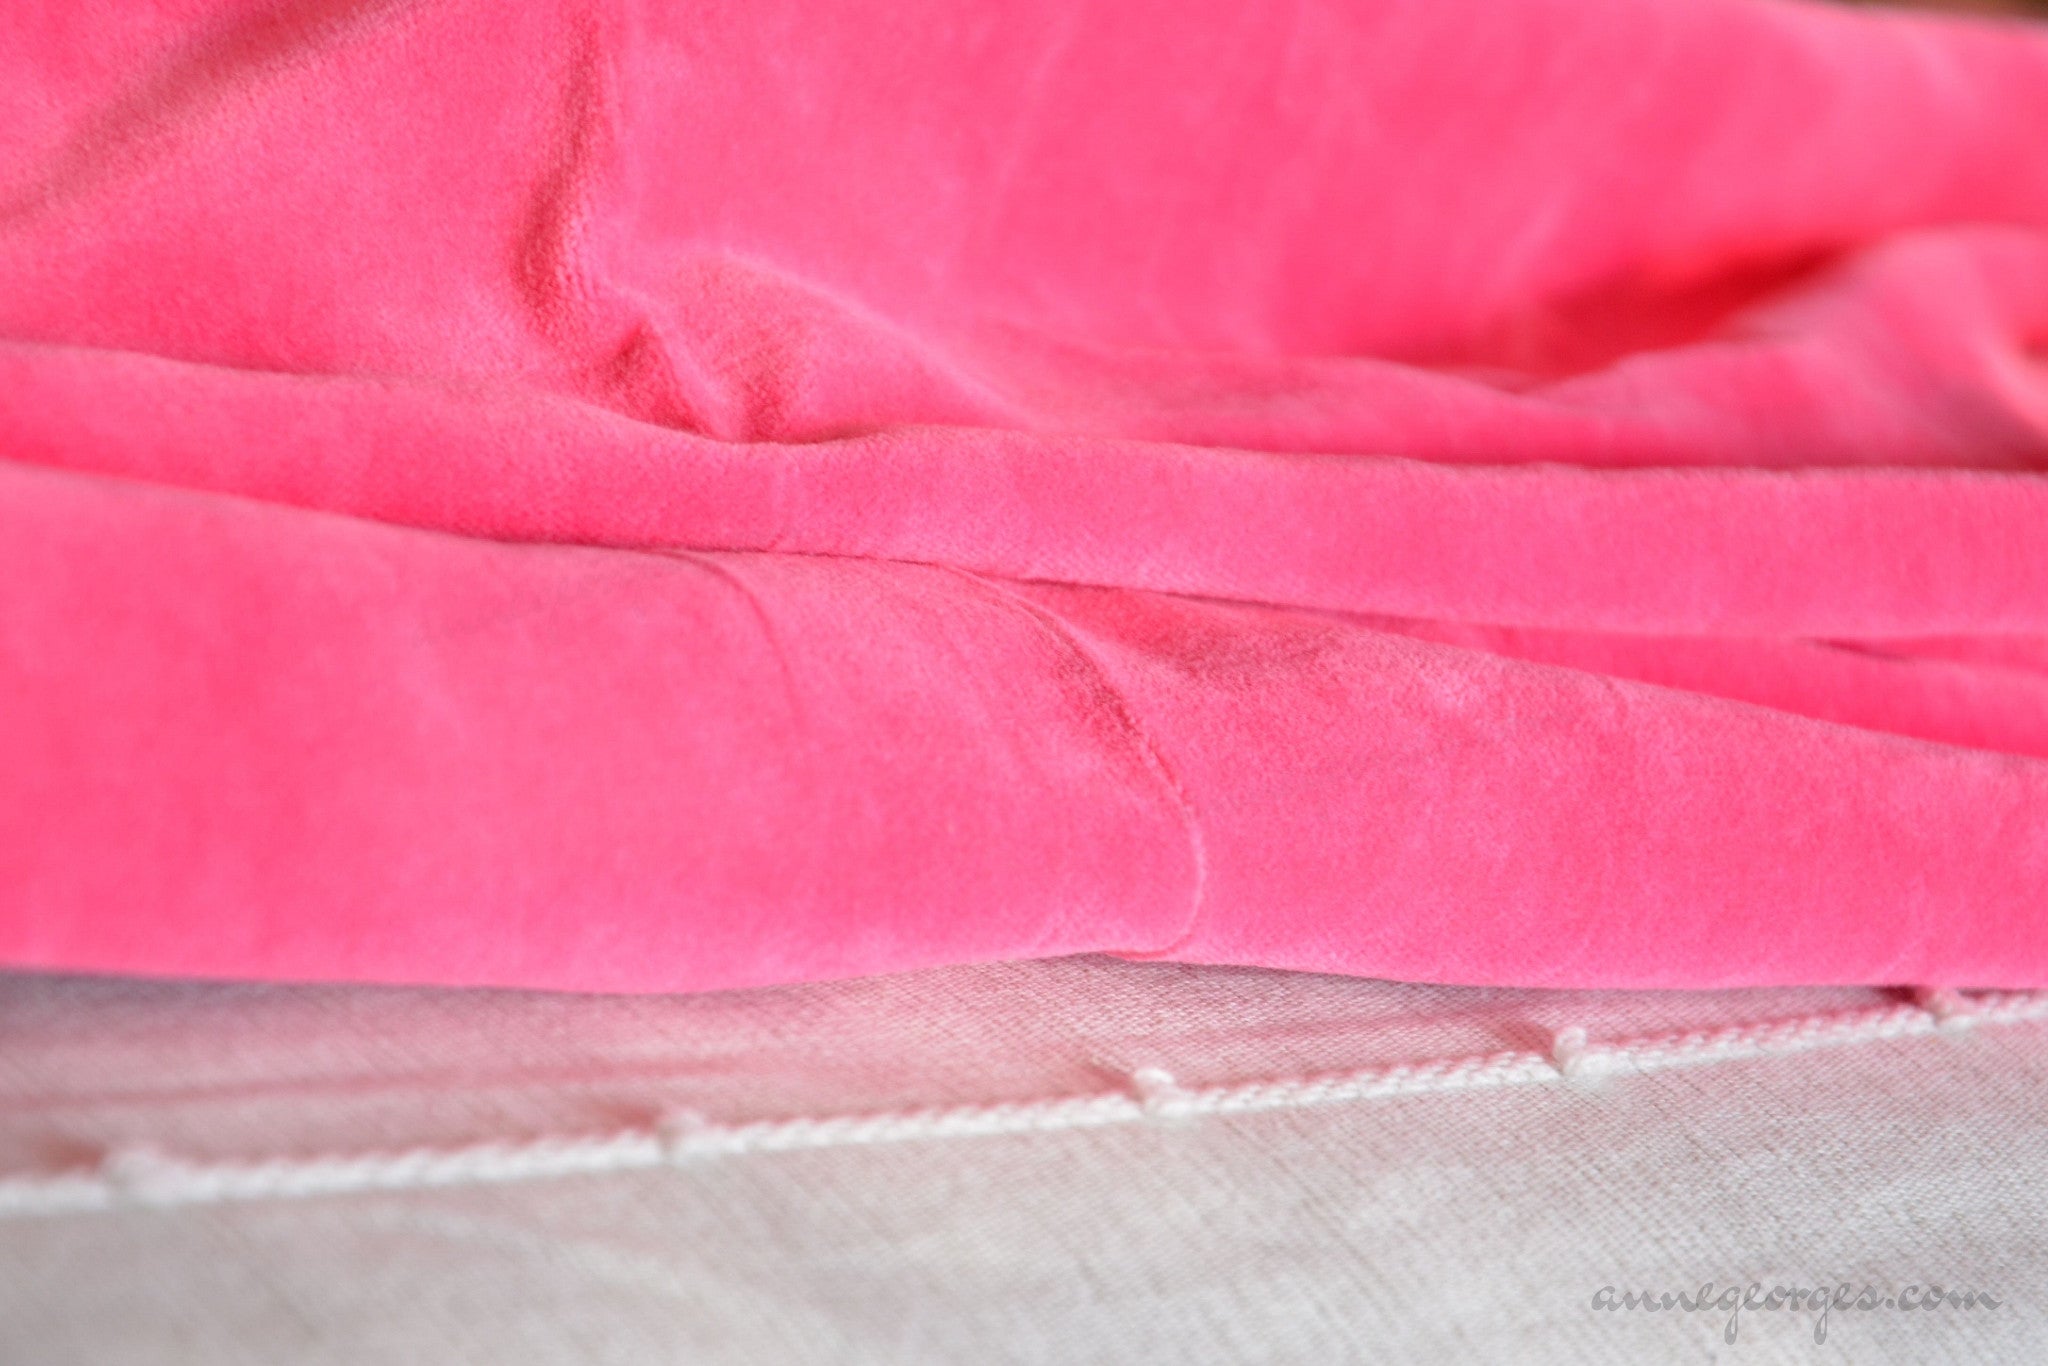 Pink Cotton Velour Fabric